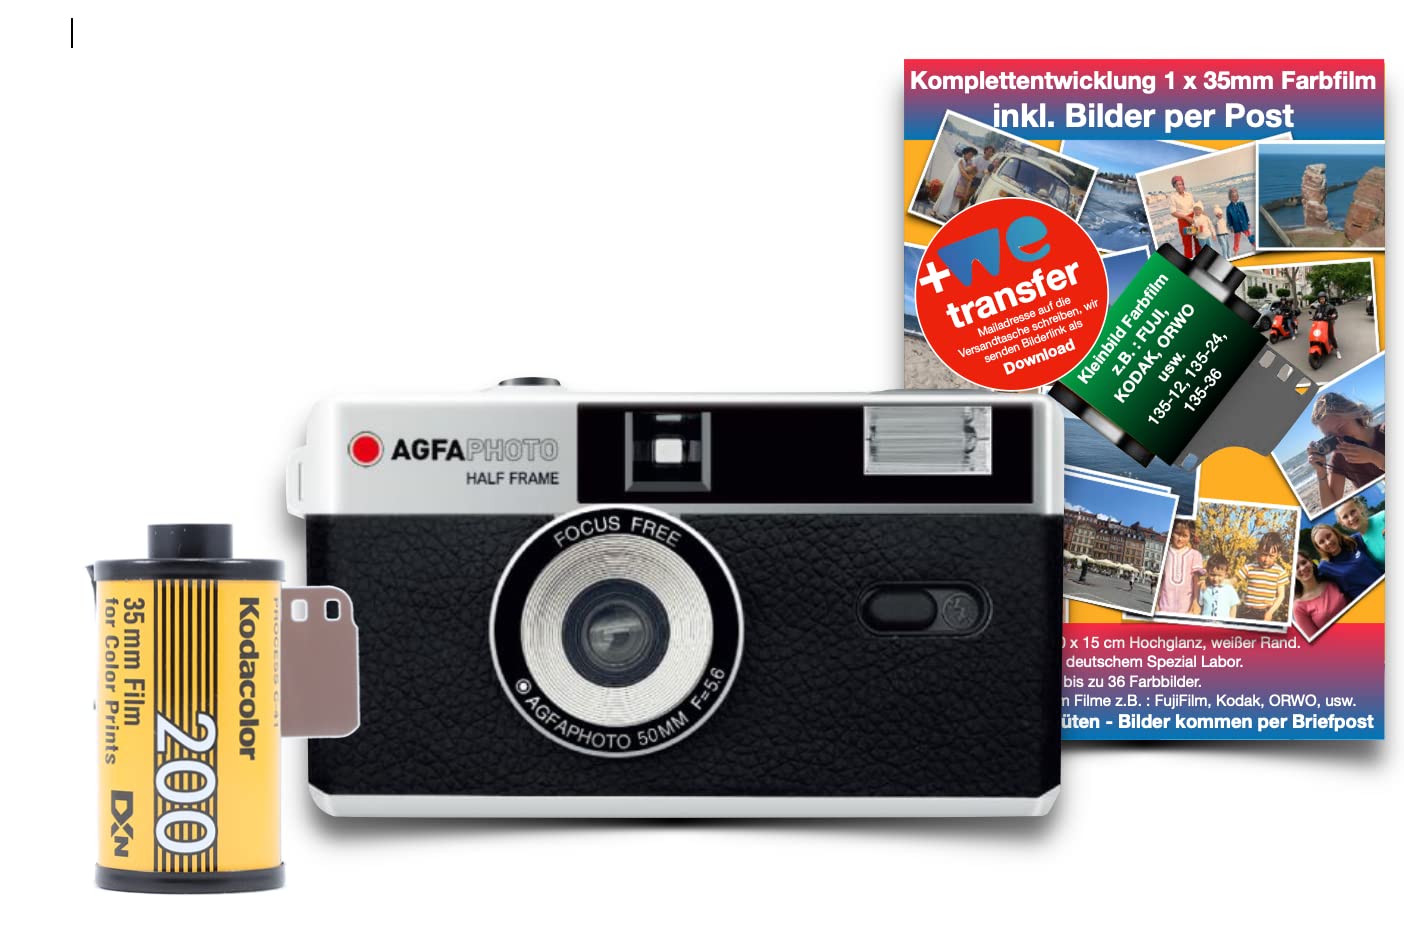 AgfaPhoto analoge 35mm 1/2 Format Foto Kamera Black im Set mit Color Negativ Film + Batterie + Negativ + Bildentwicklung per Post